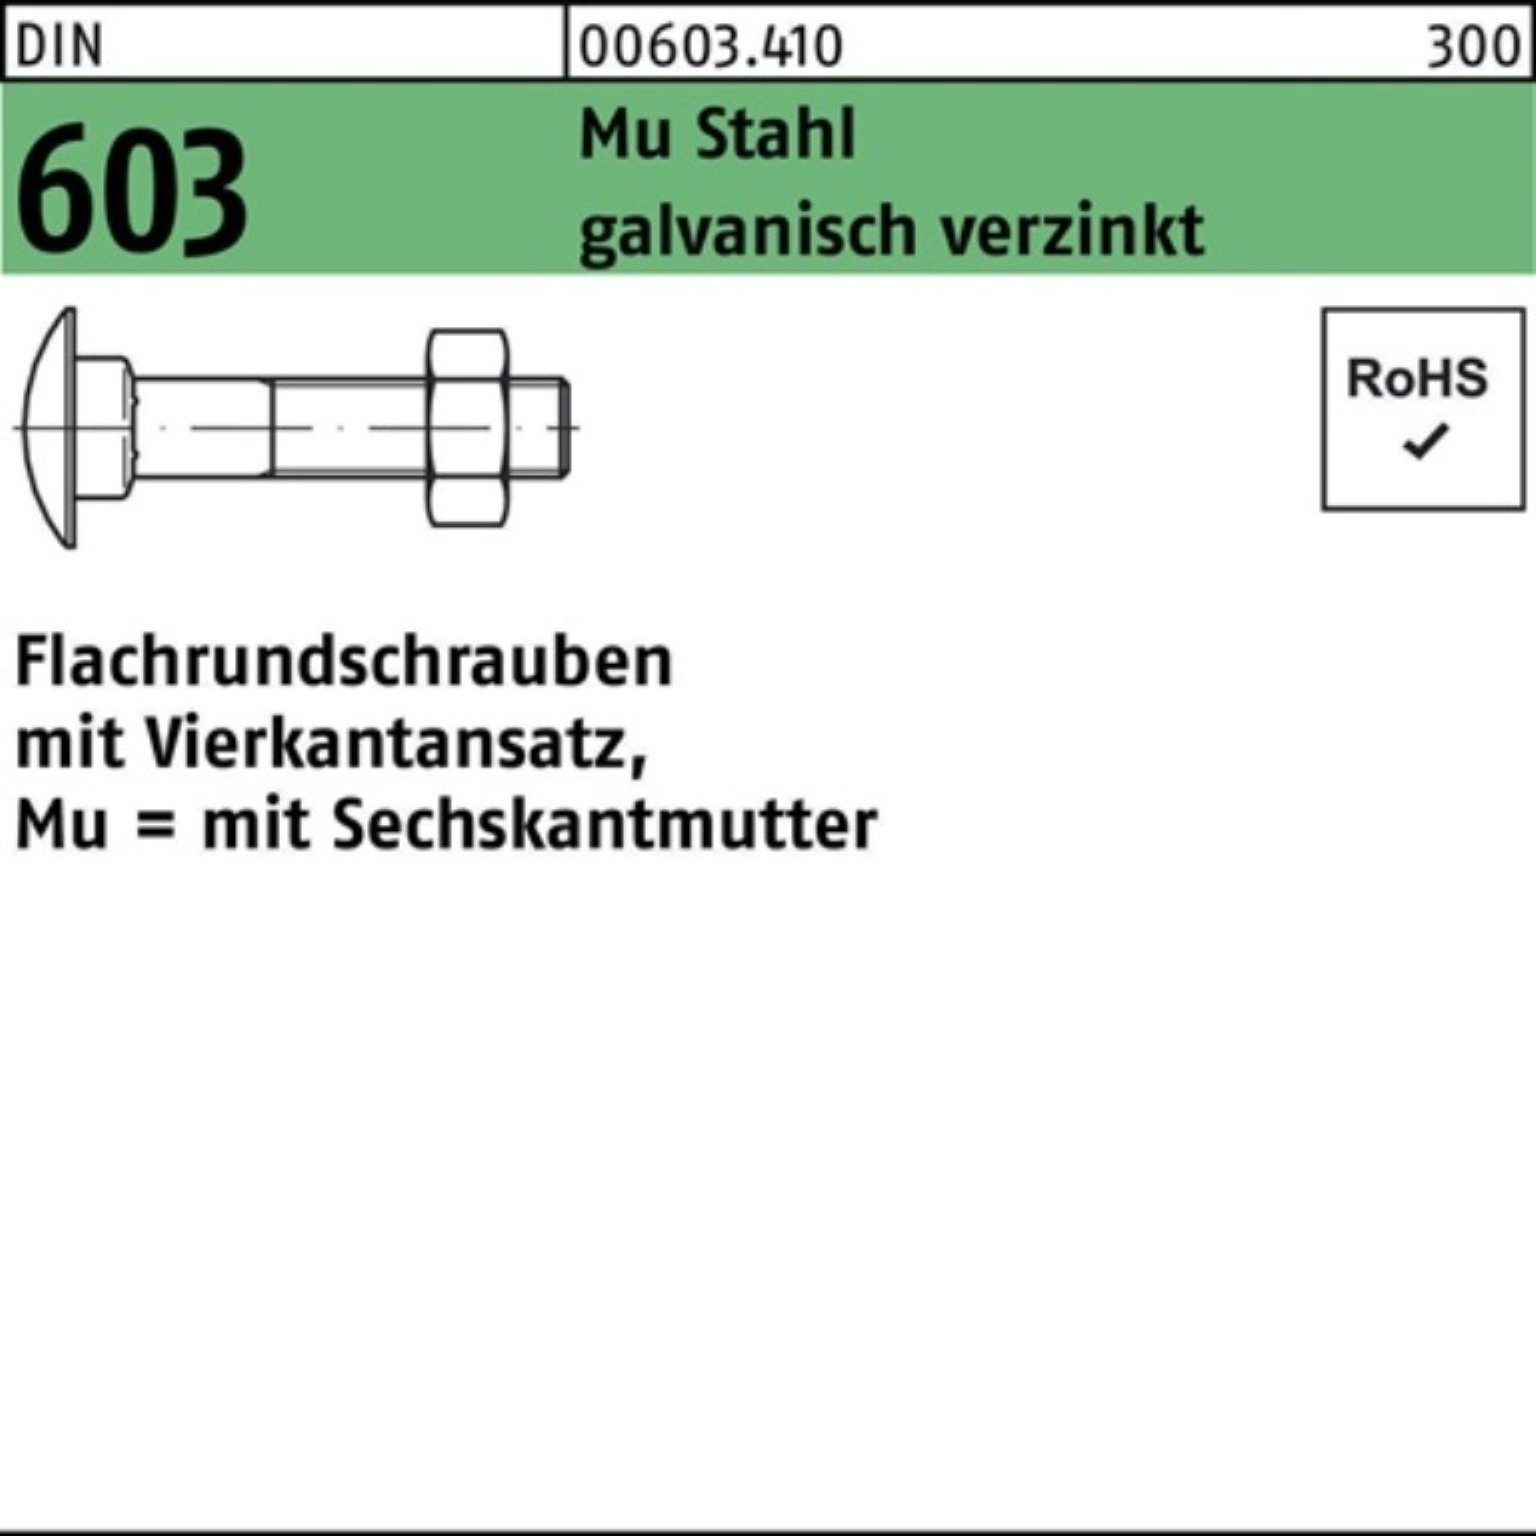 Vierkantansatz/6-ktmutter M Reyher Flachrundschraube Schraube Pack 603 M8x45 DIN 200er